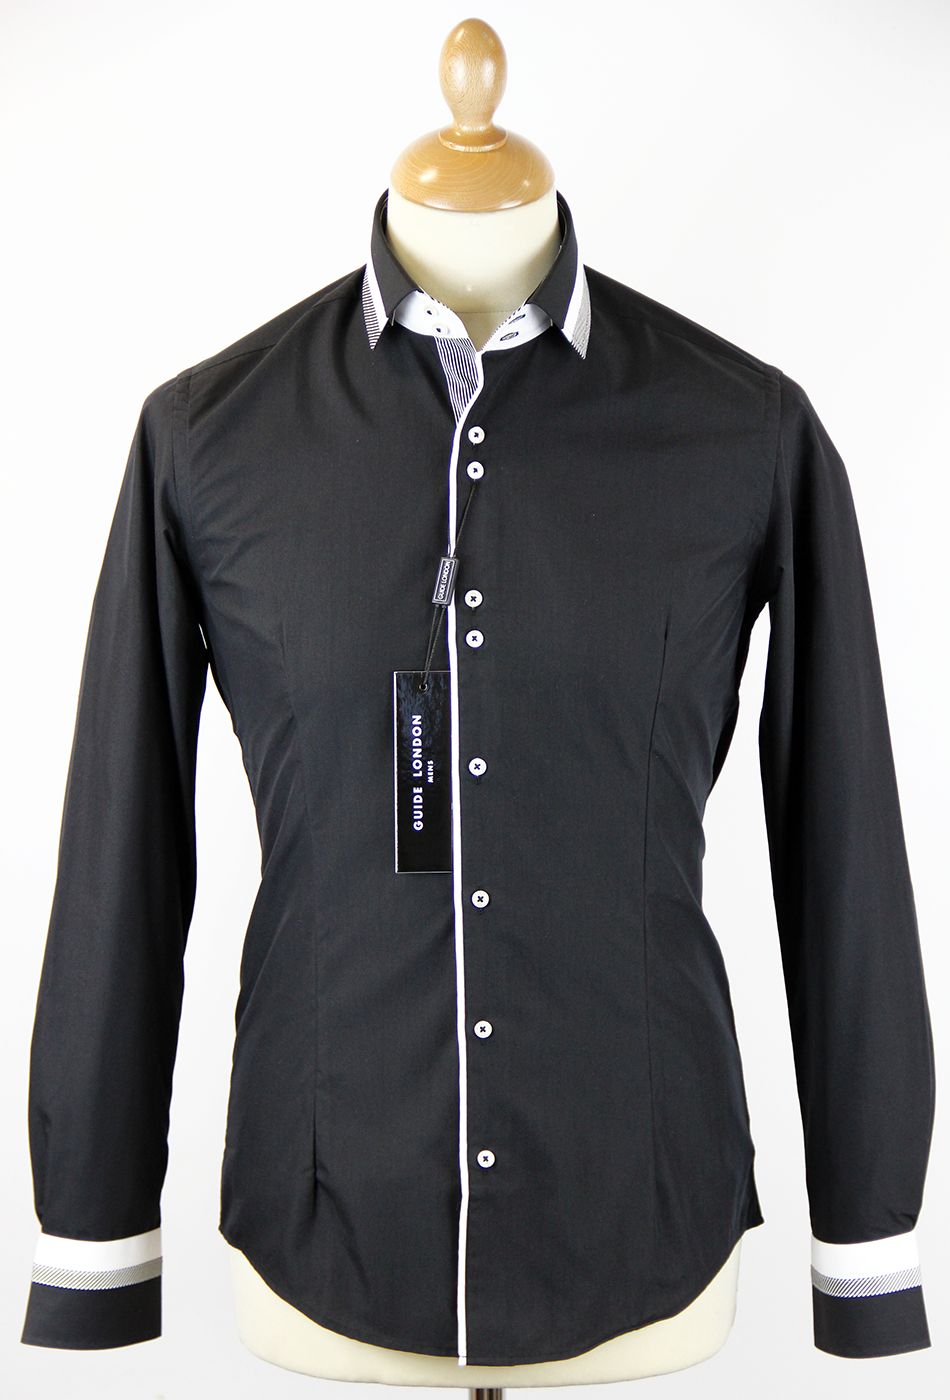 Stripe Trim GUIDE LONDON 60s Mod Tailored Shirt B